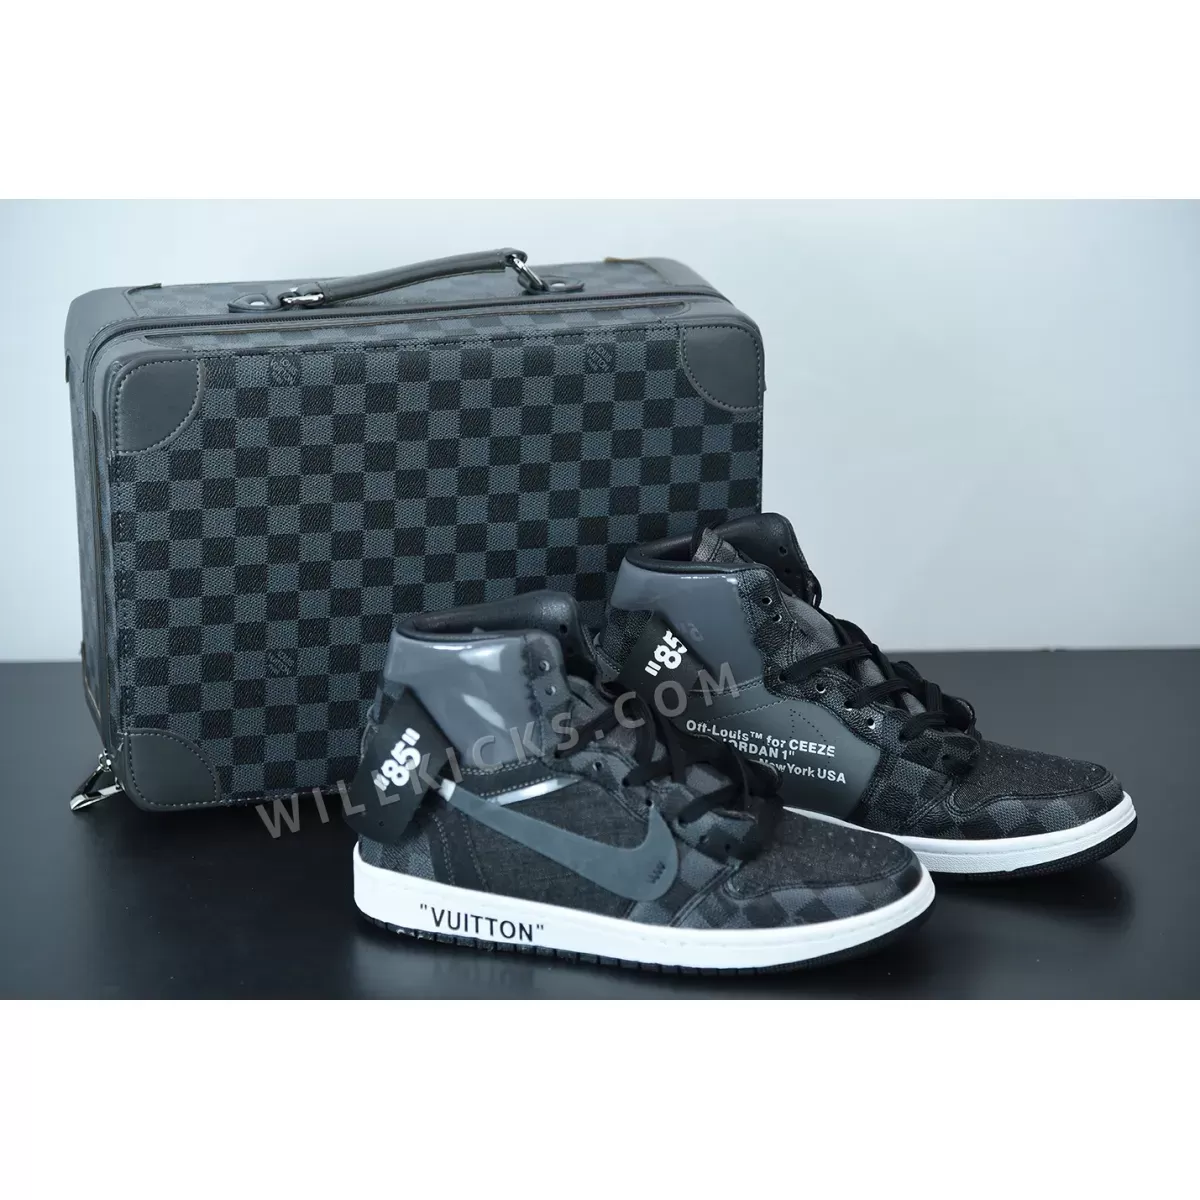 OFF–WHITE x Air Jordan 1 Custom Black by Ceeze, off white jordan 1 black